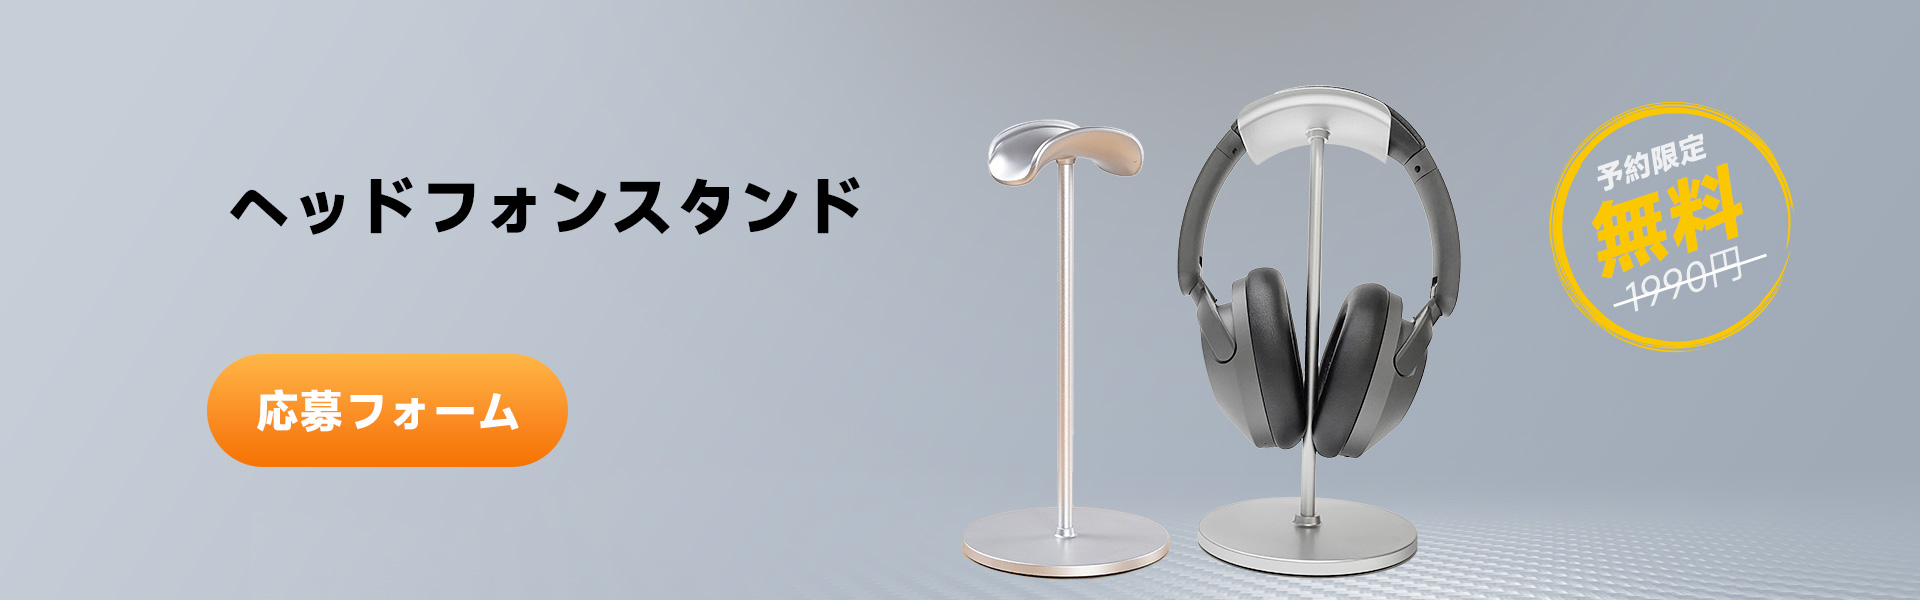 earfun headphone stand